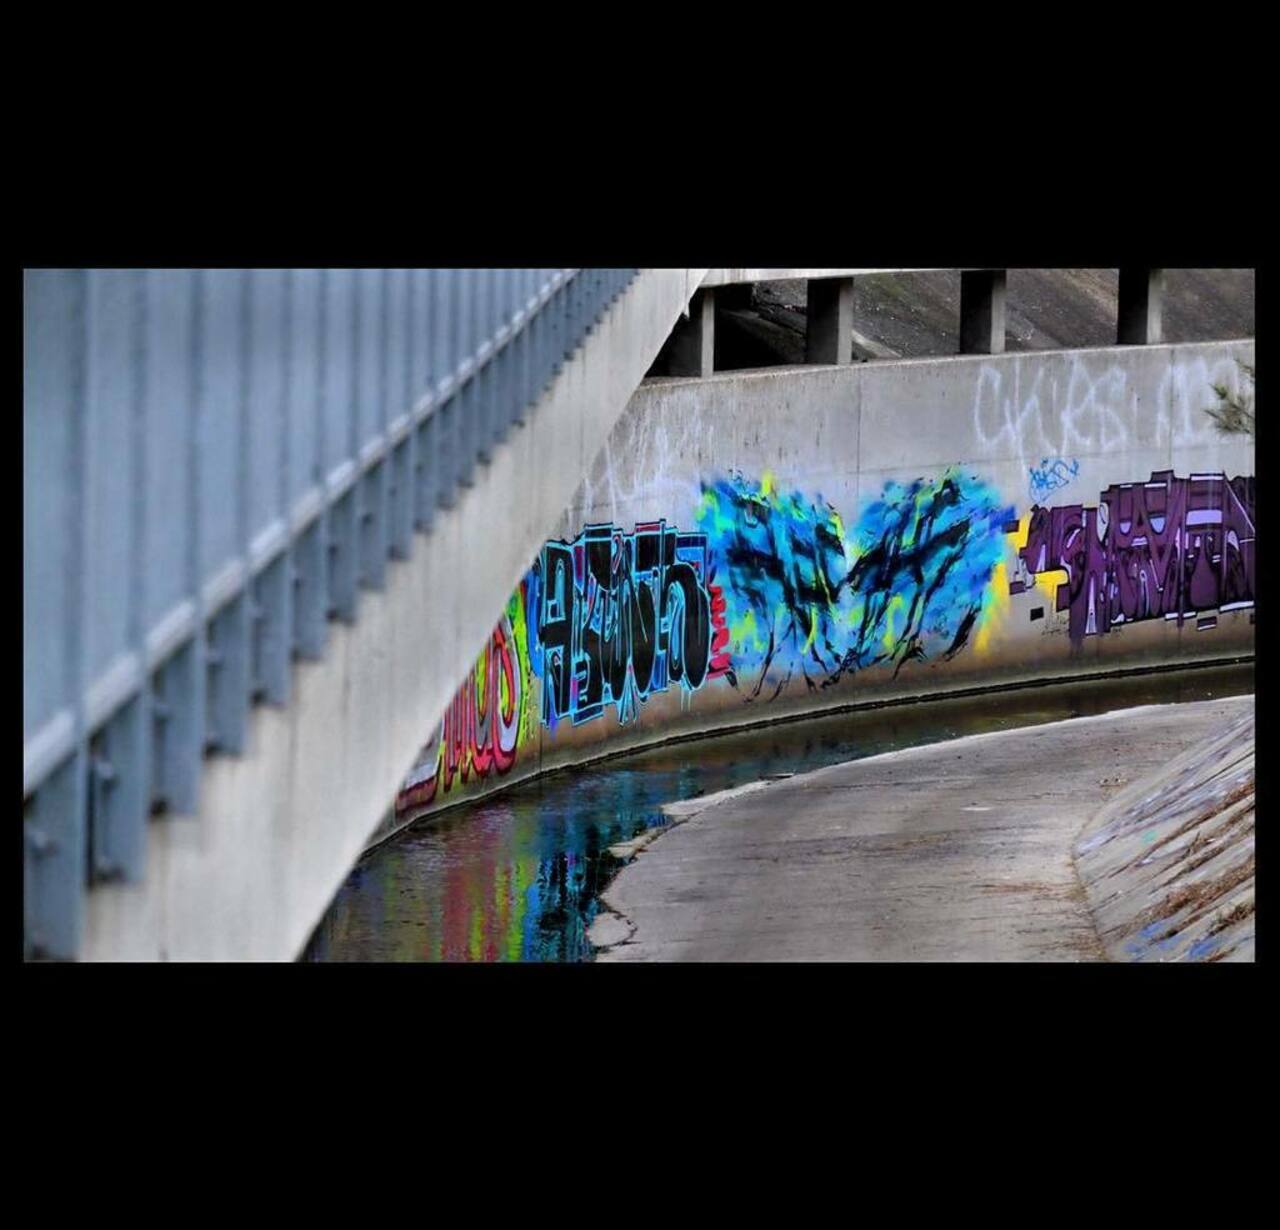 #streetart #urbanart #aerosolart #streetartmelbourne #aerosol #melbournestreetart #graffiti #taggers #tagging #graf… http://t.co/6P8EmzM2Mn